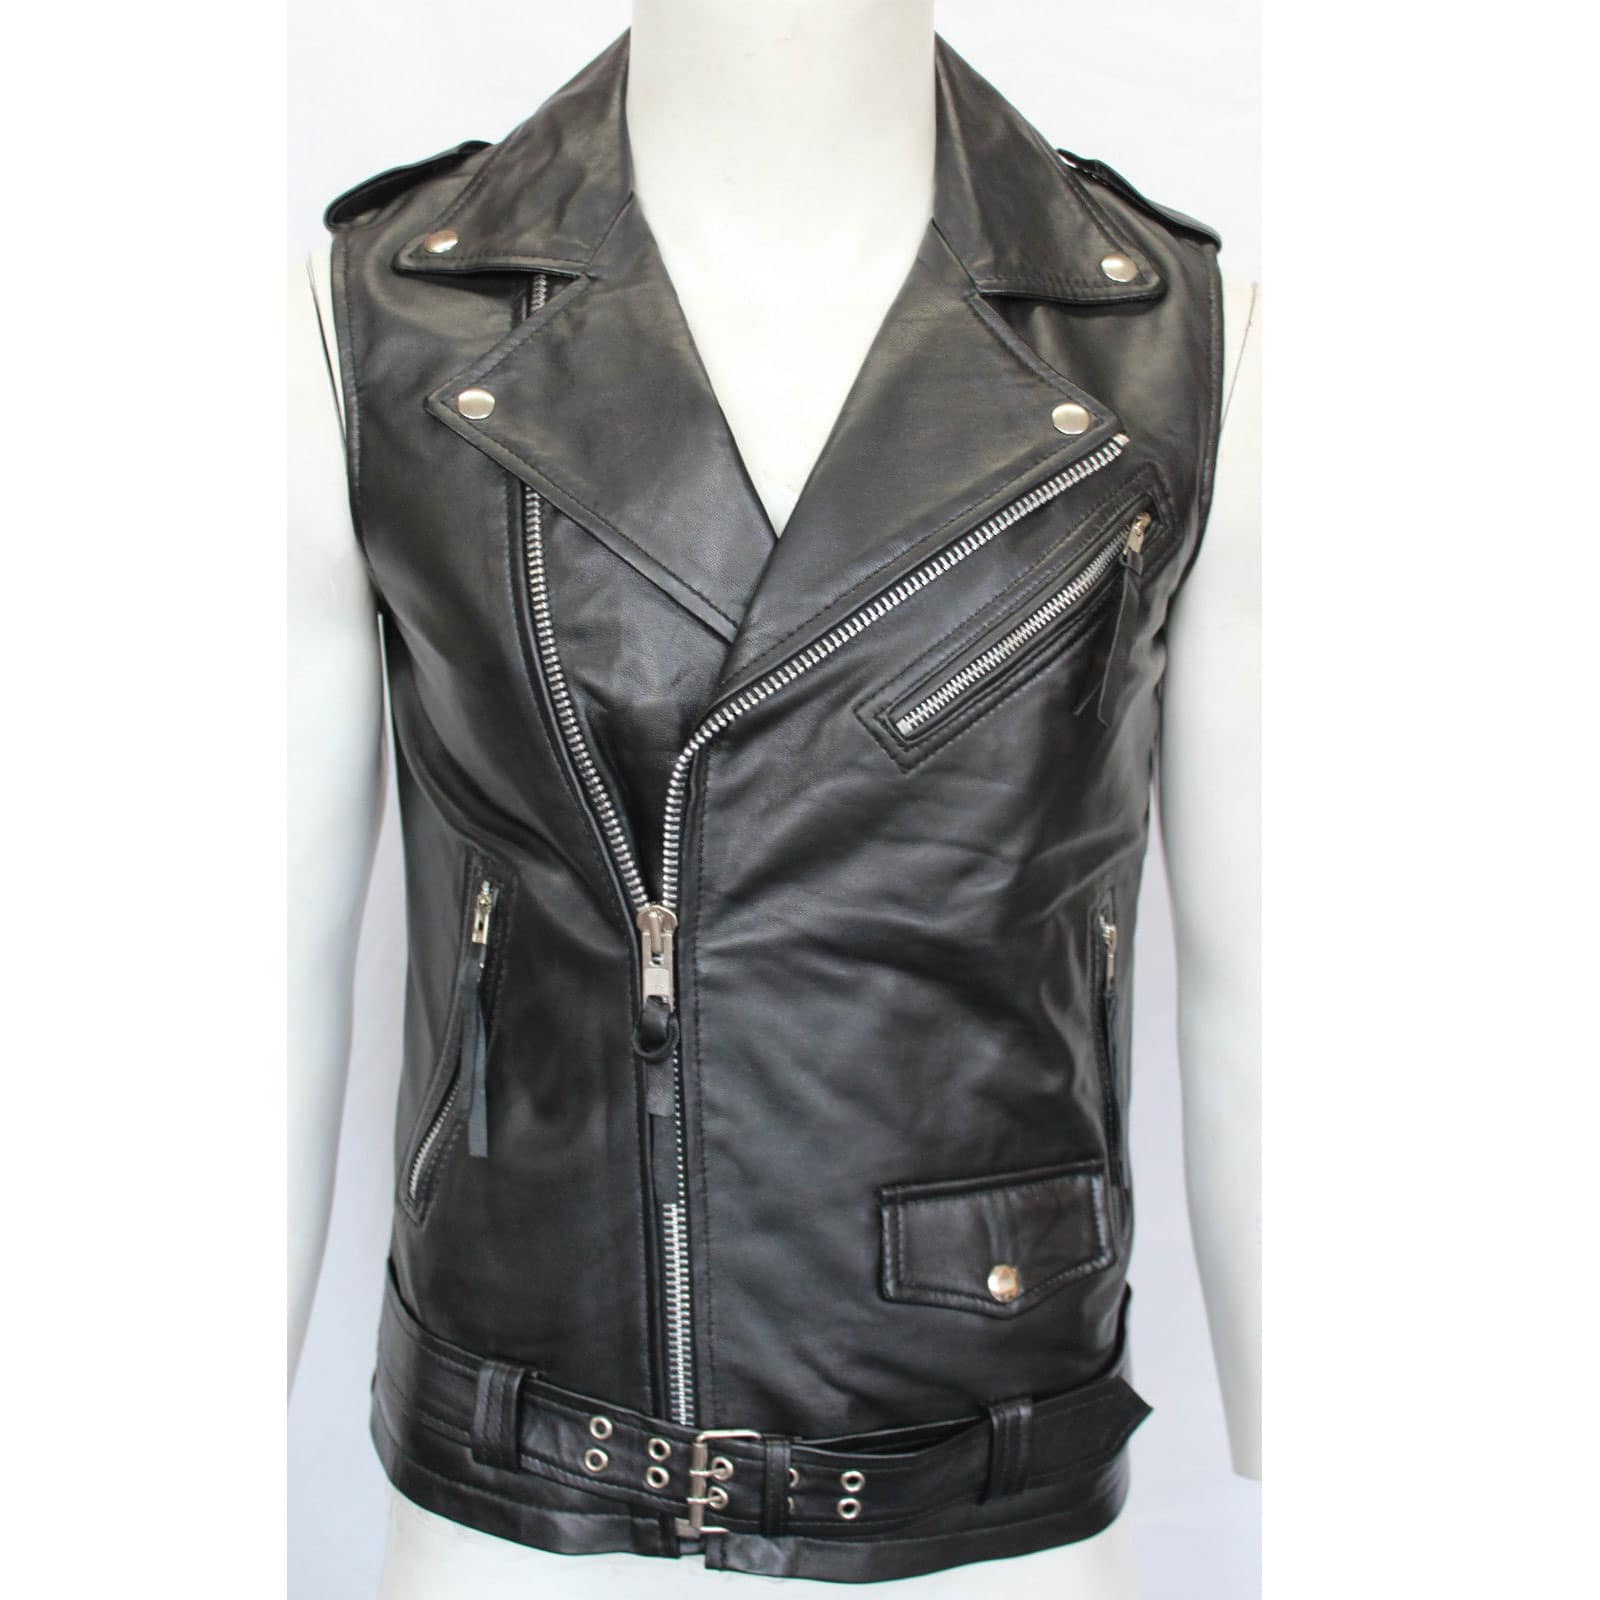 https://www.kiltandjacks.com/wp-content/uploads/2017/09/Sleeveless-Brando-Vintage-Motorcycle-Black-Leather-Jacket.jpg